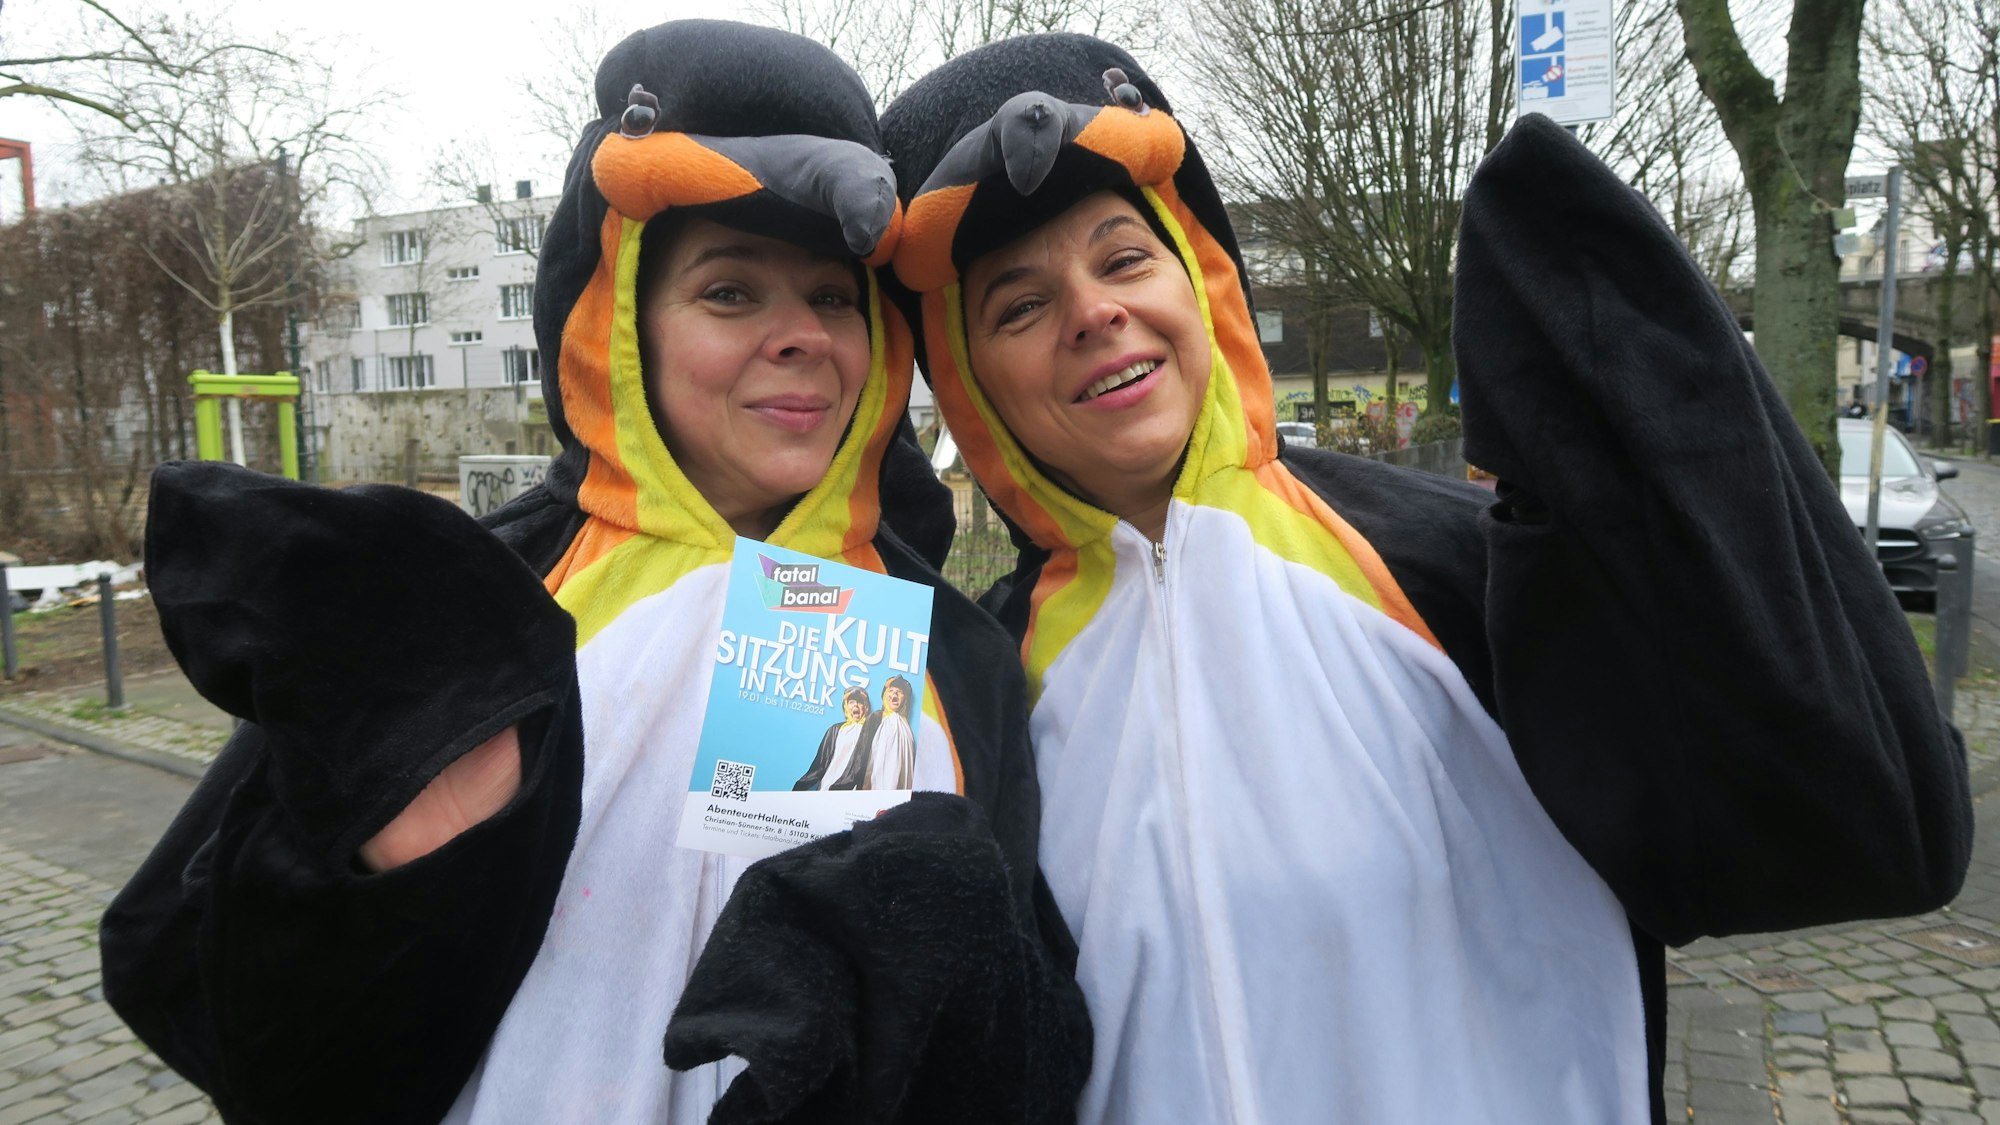 Zwei Frauen im Pinguin-Kostüm zeigen den Flyer der Kultsitzung Fatal Banal.